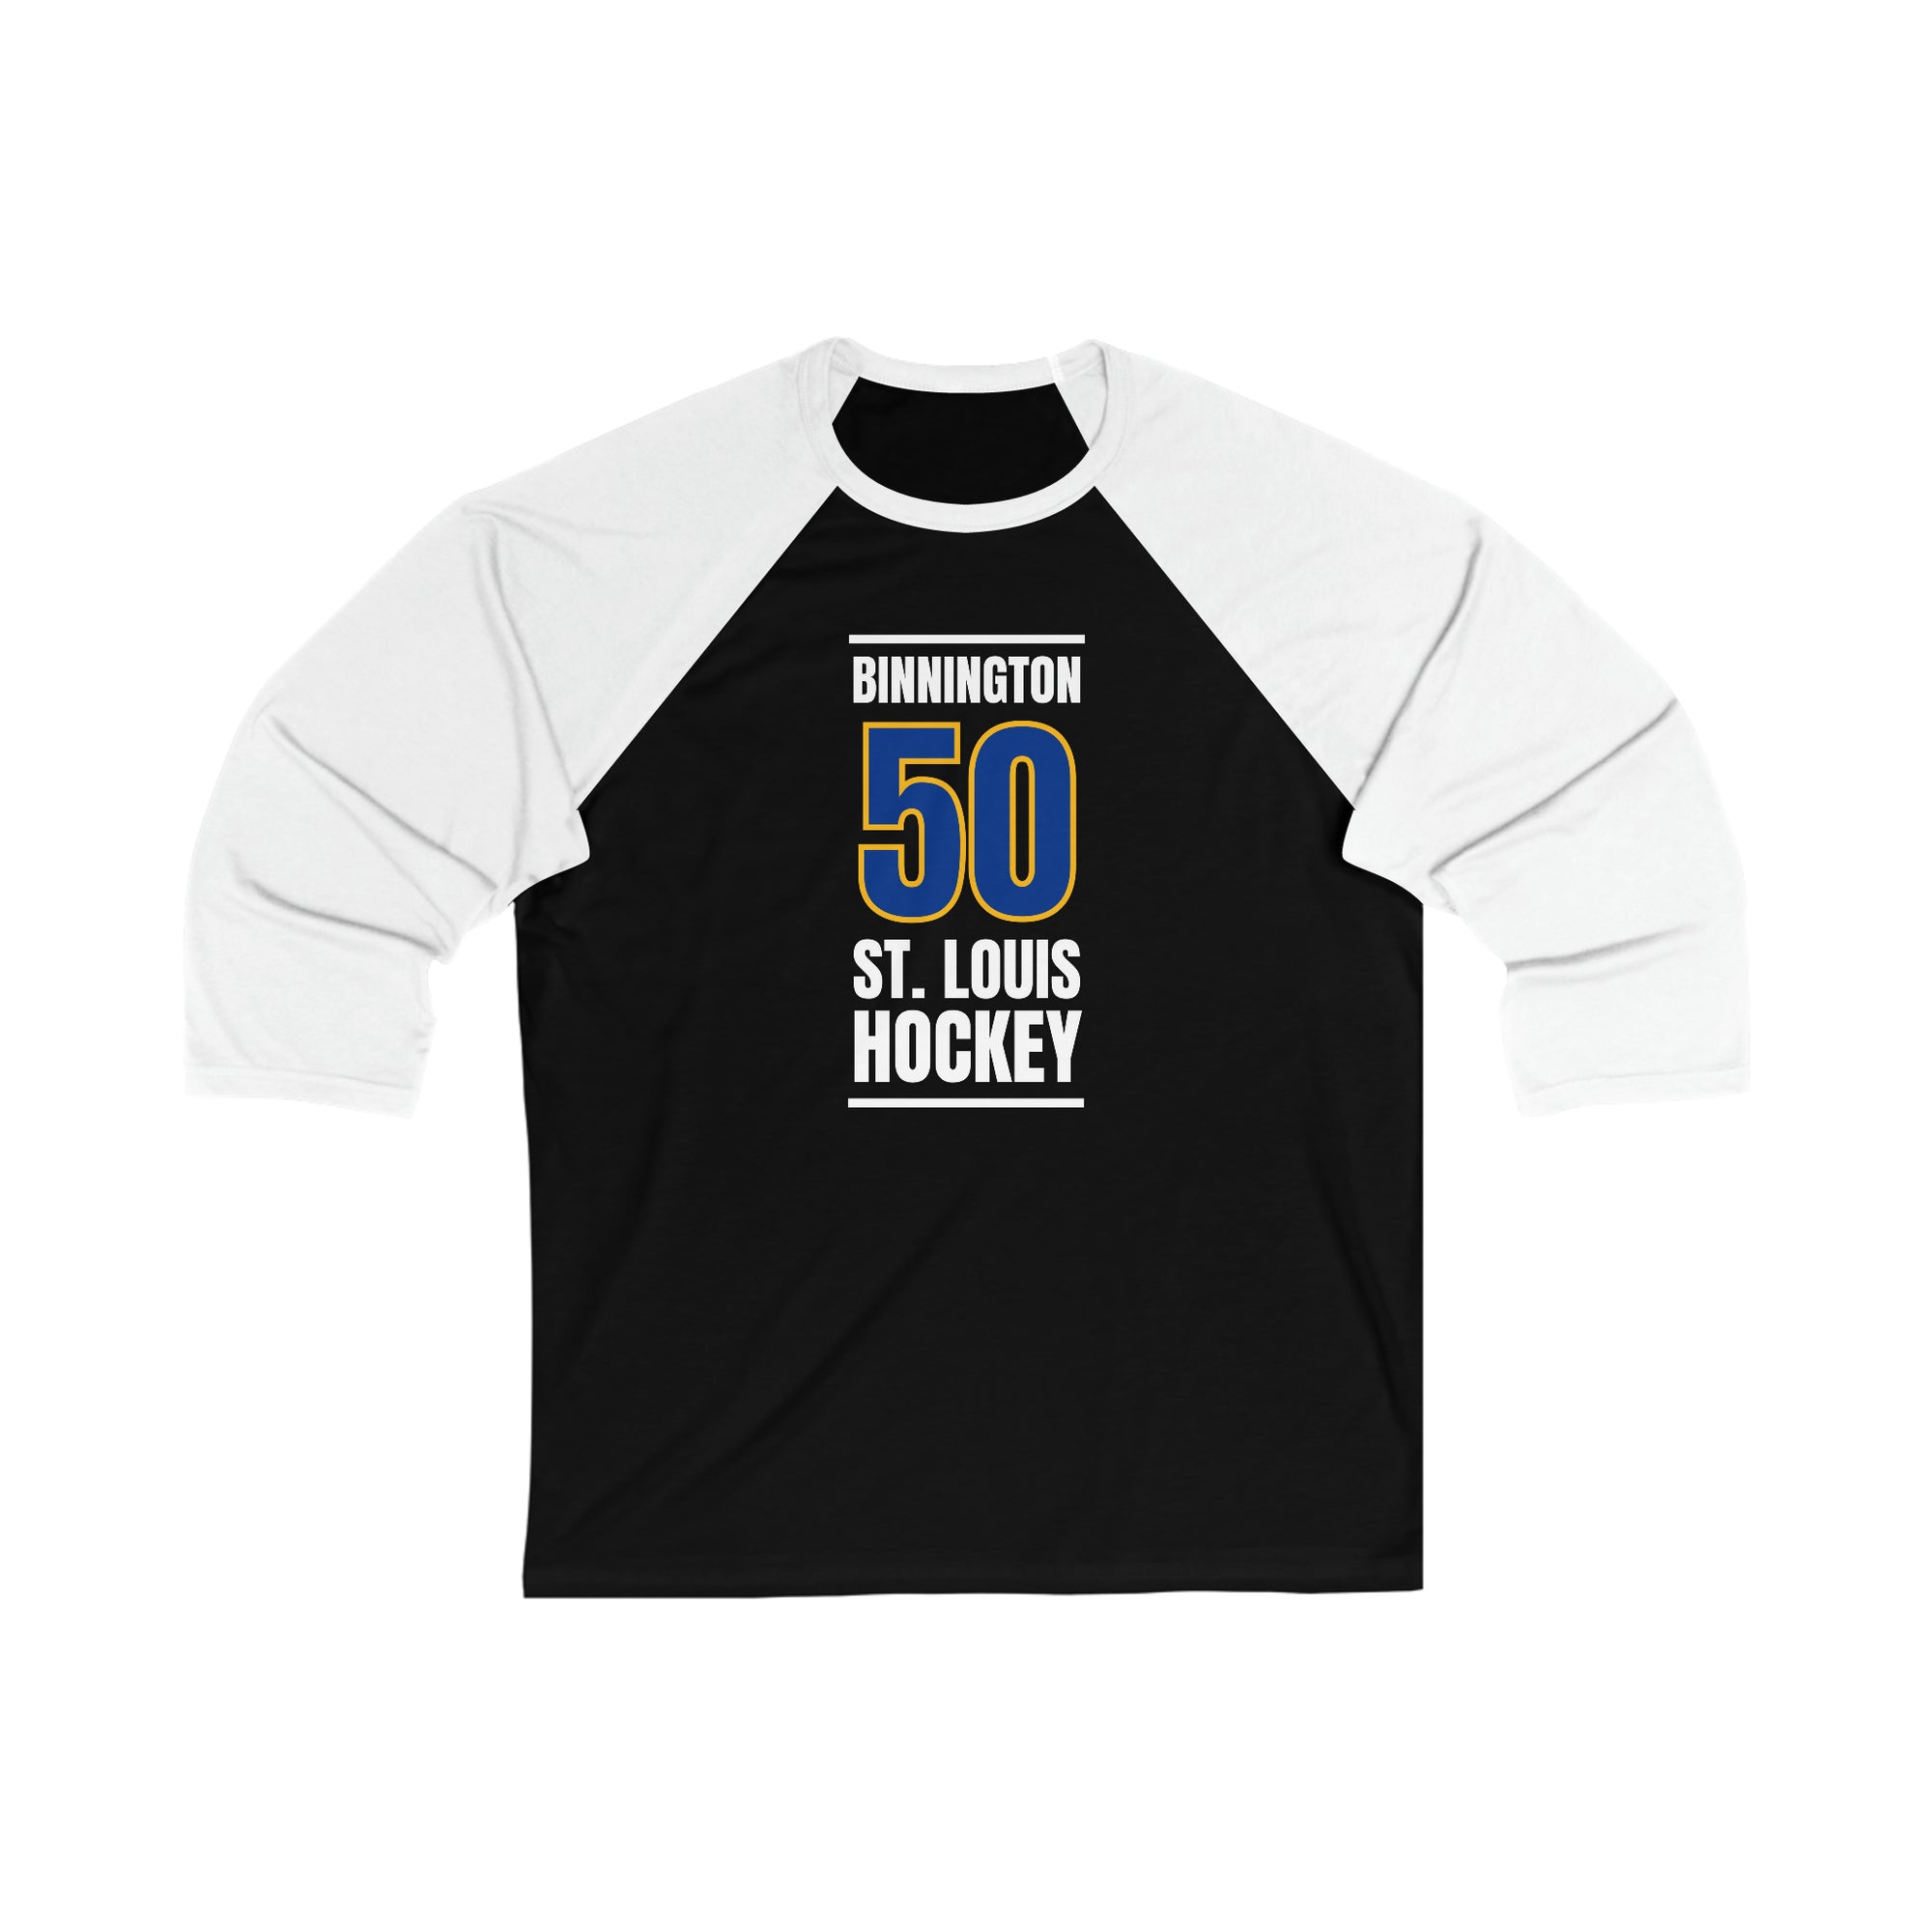  Jordan Binnington Shirt - St. Louis Hockey Raglan Tee - Jordan  Binnington Elite : Sports & Outdoors